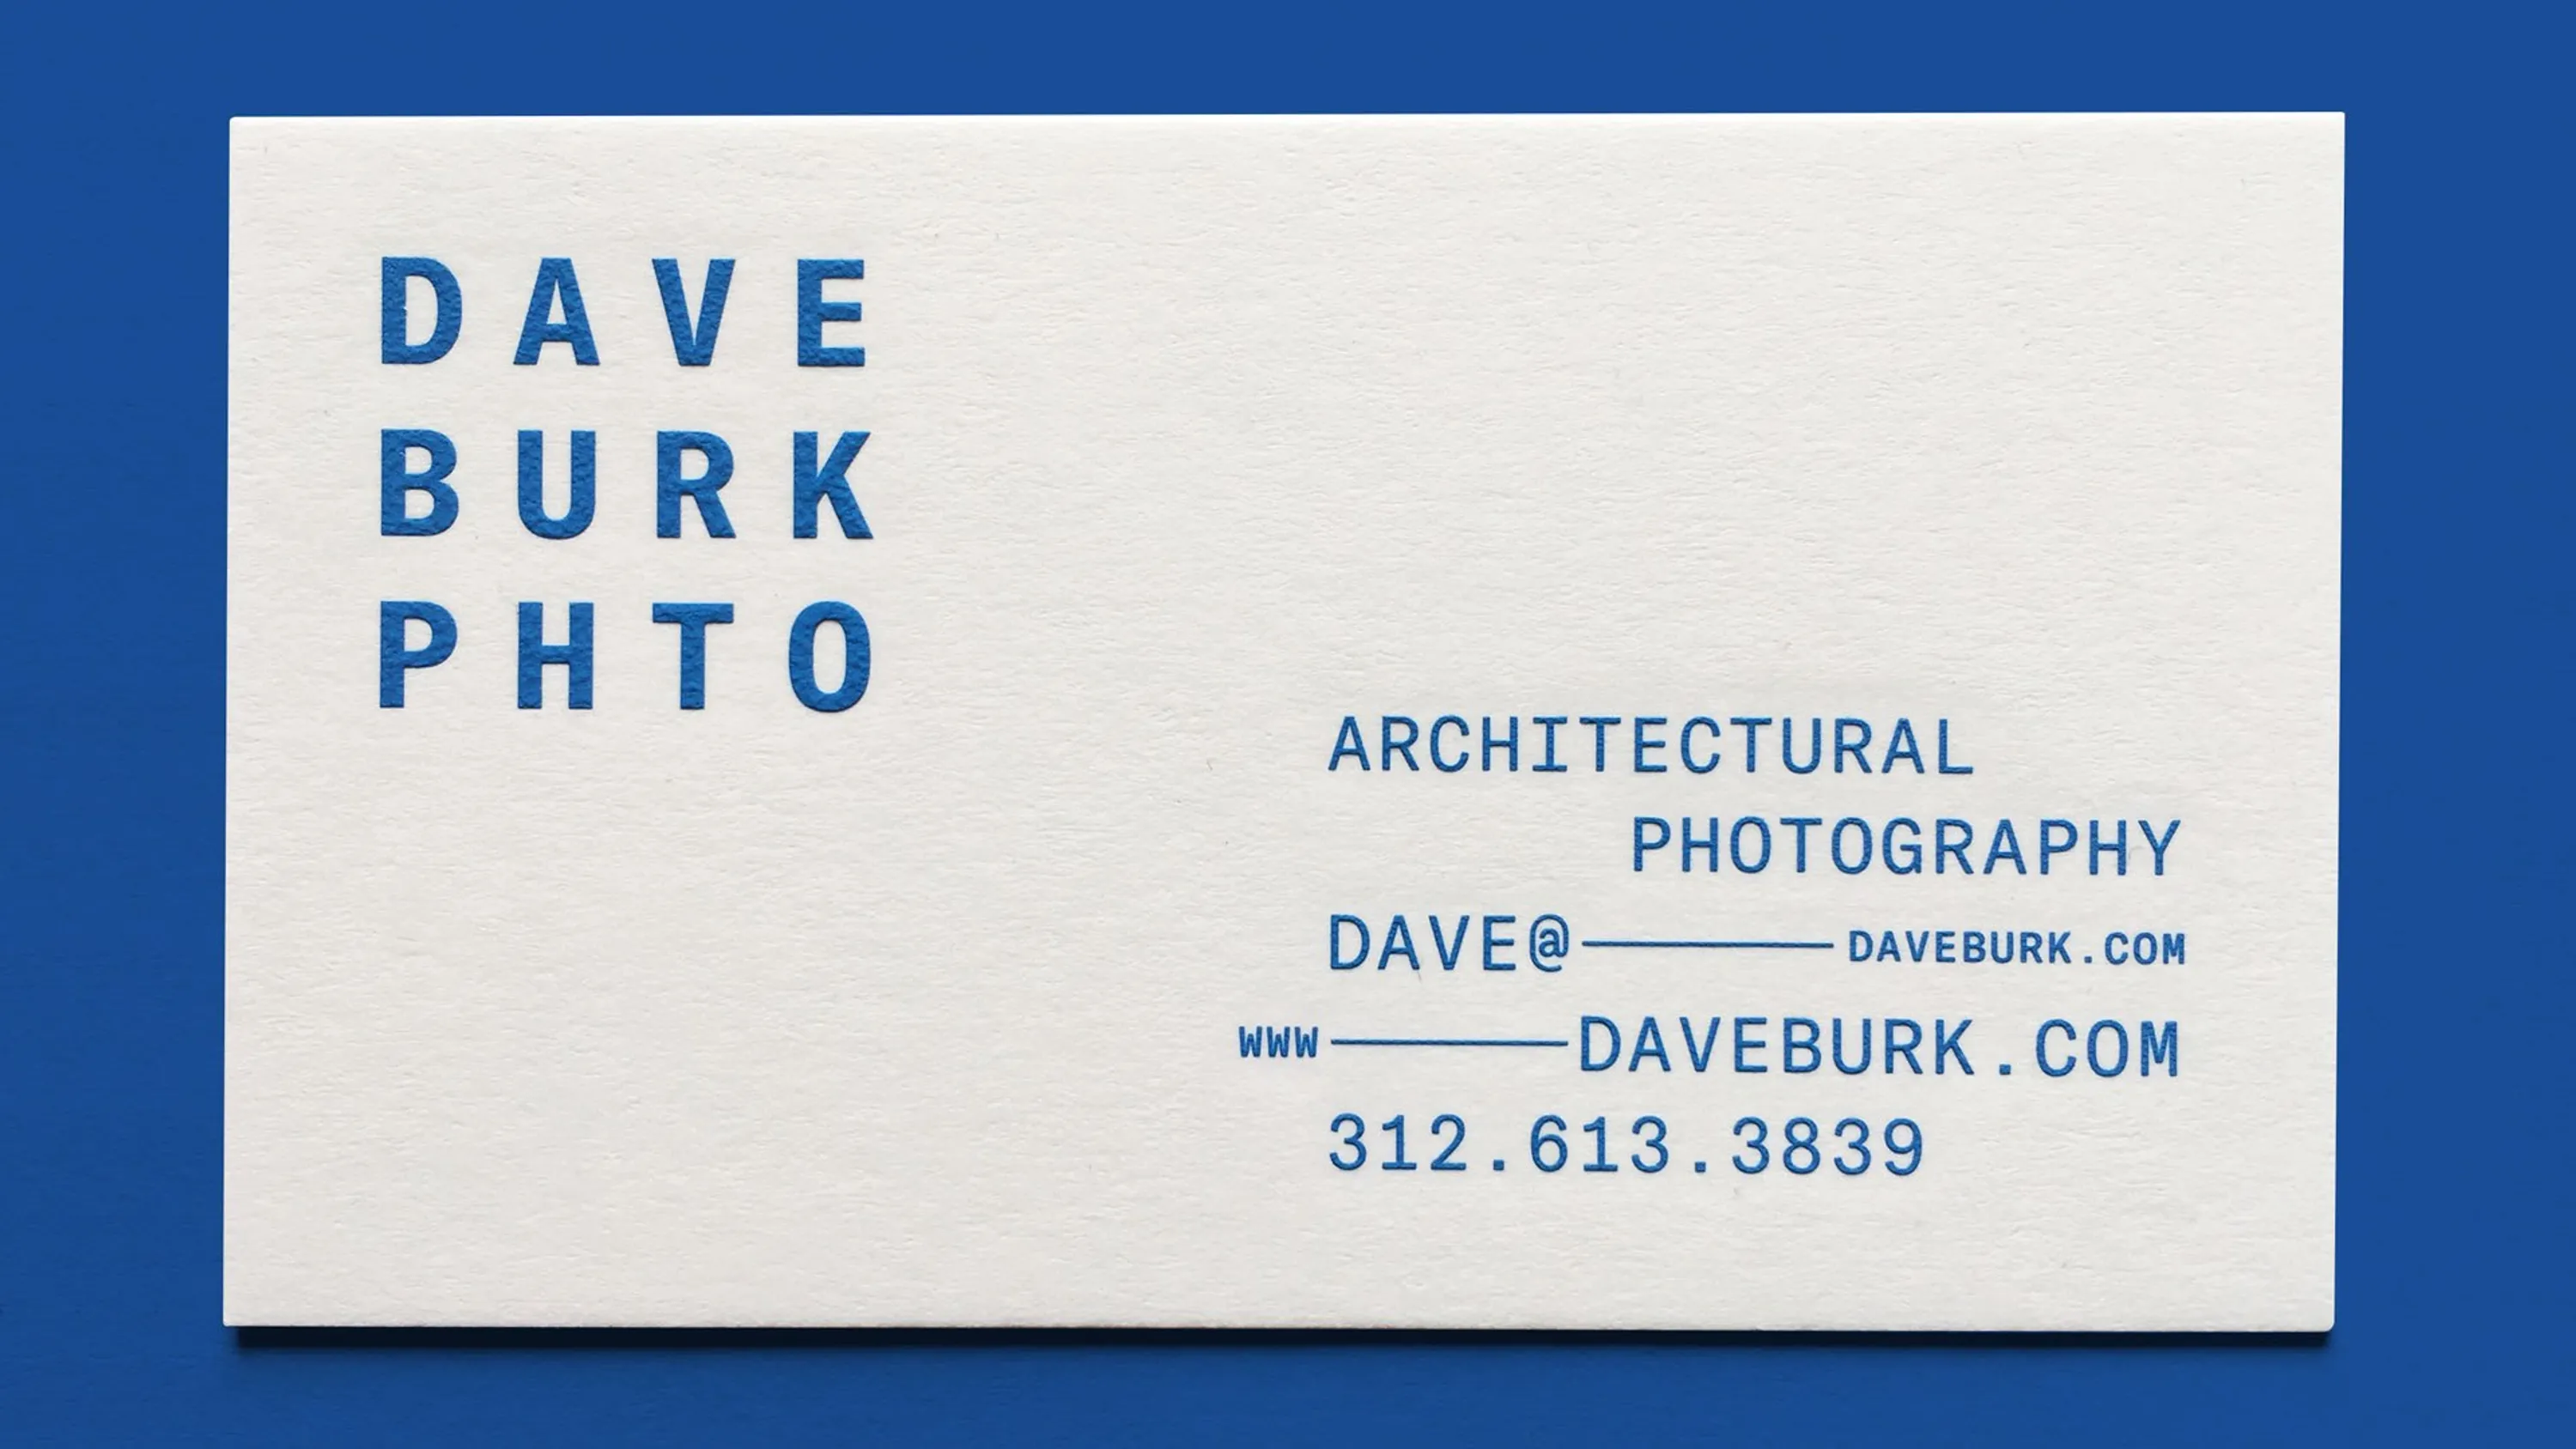 Dave Burk Photo Business Card